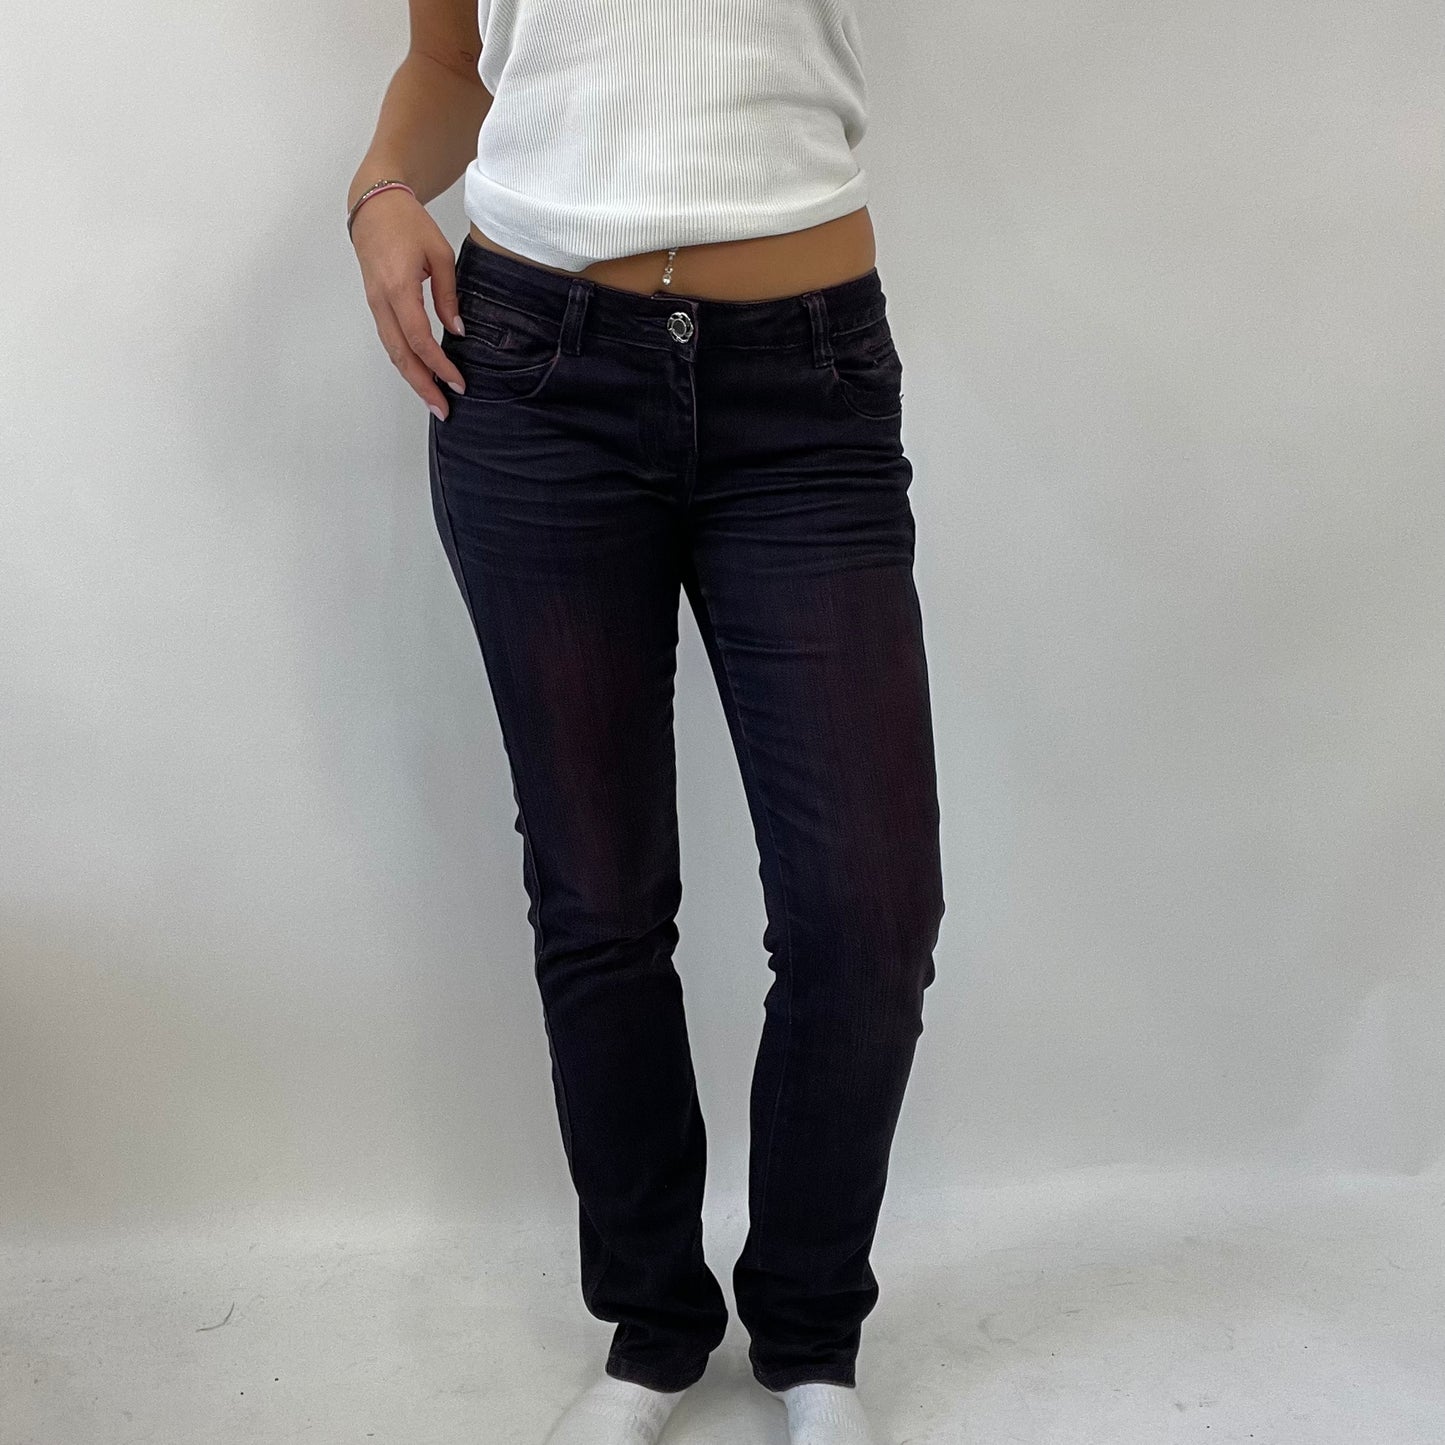 HAILEY BIEBER DROP | small purple skinny jeans with diamanté pocket